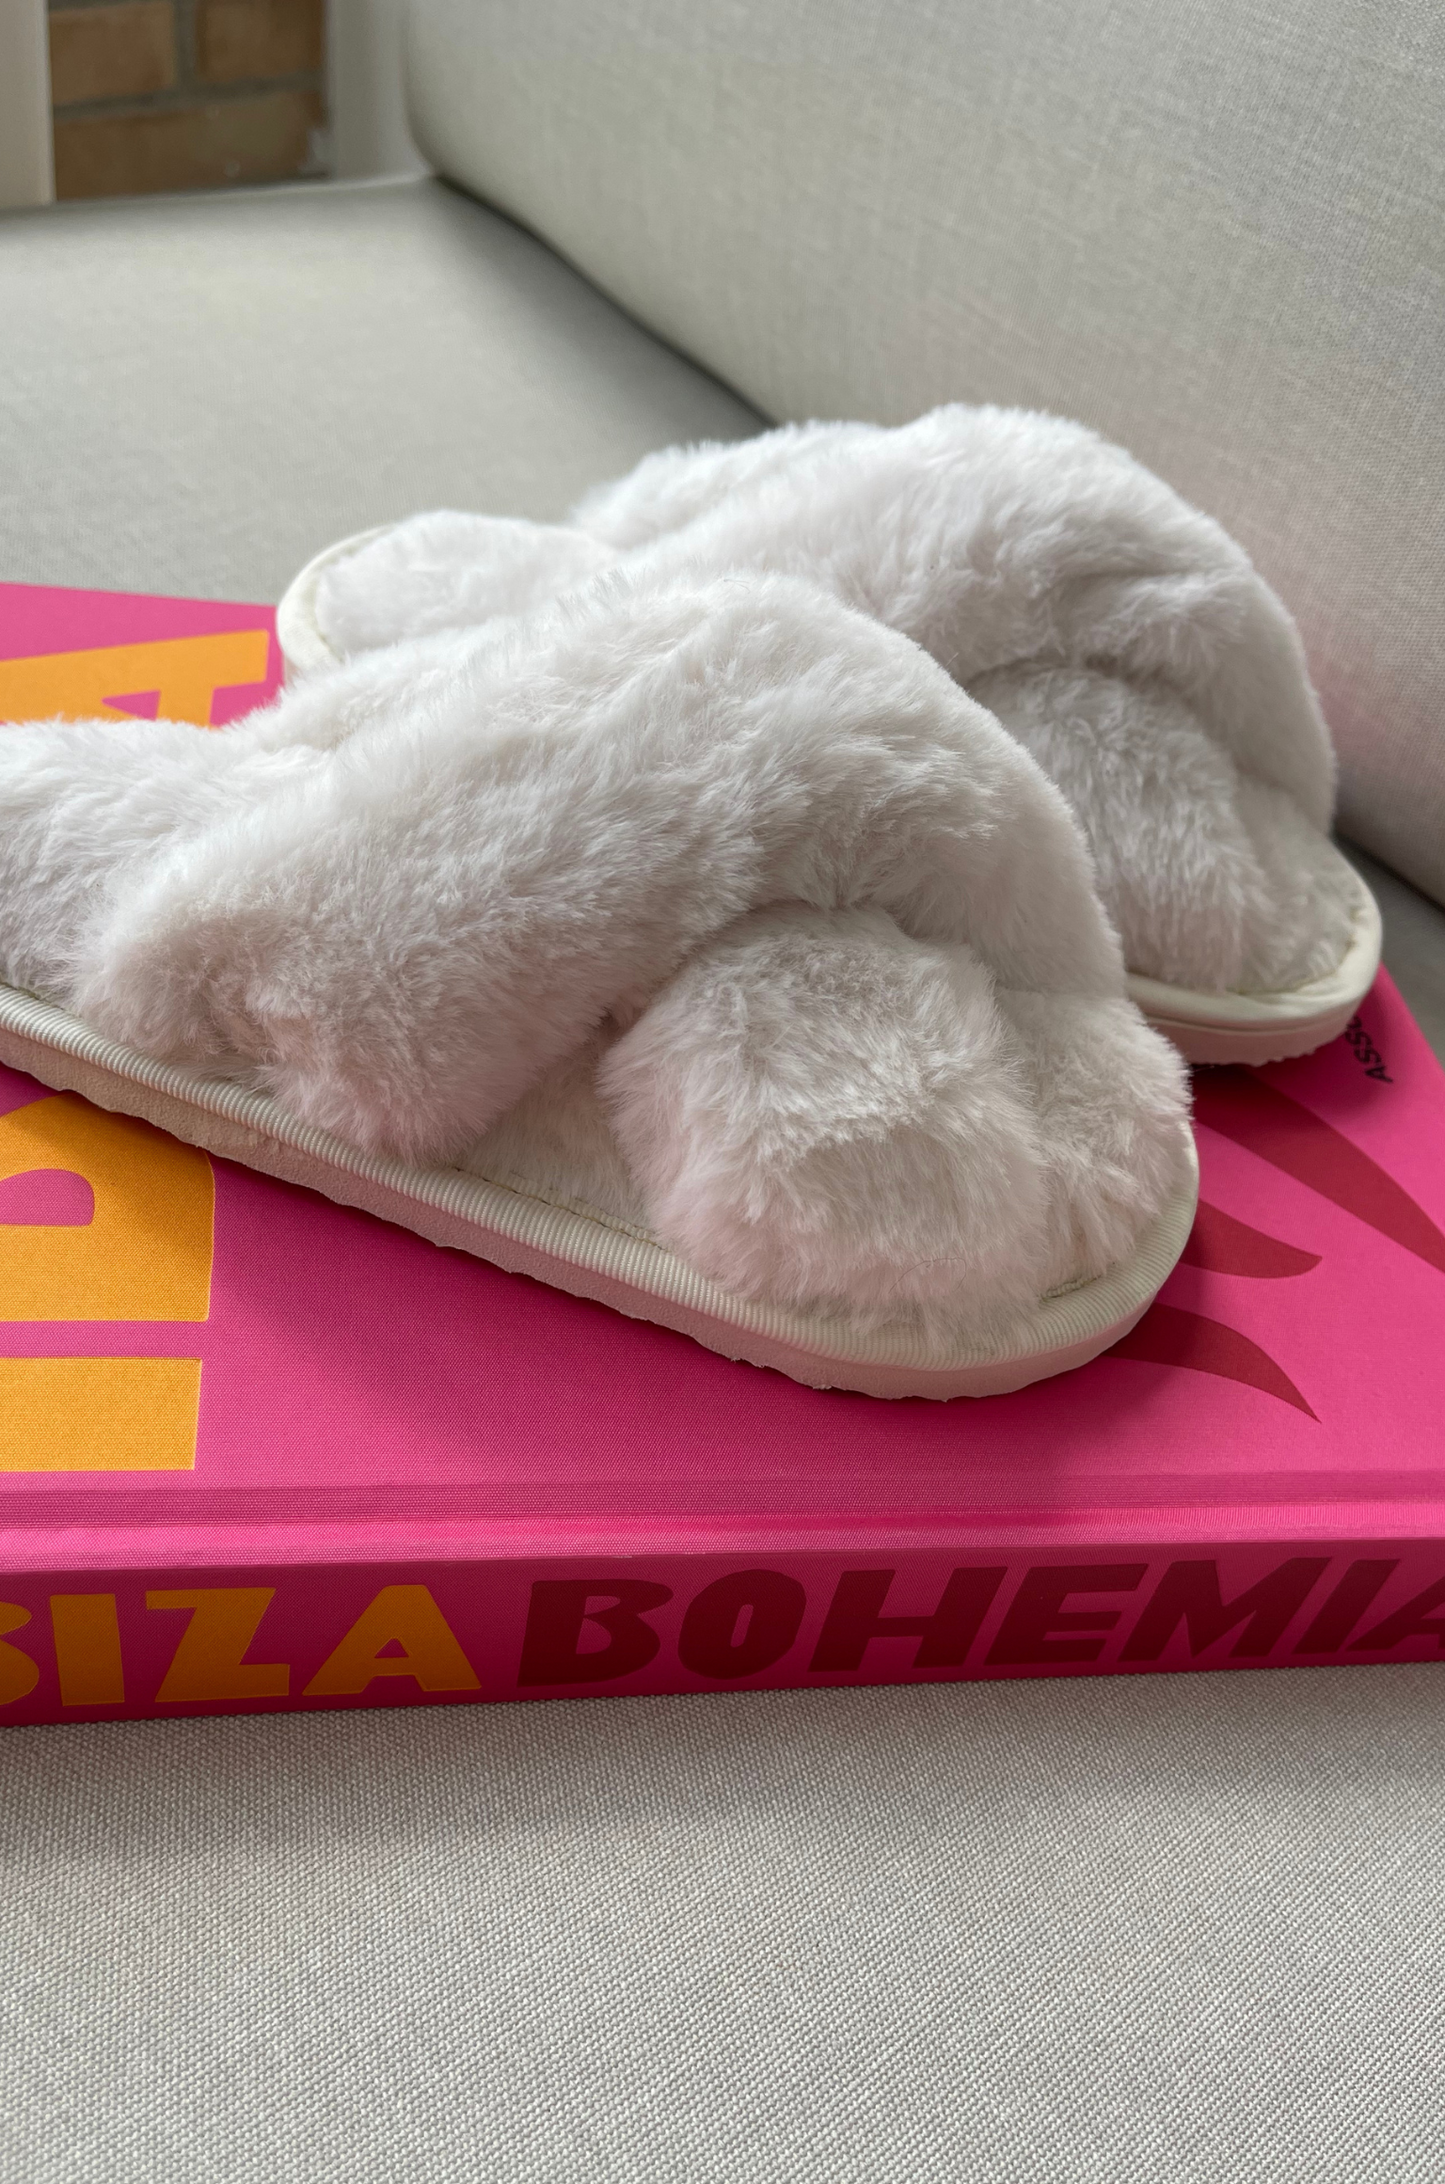 Fluffy slippers blancas